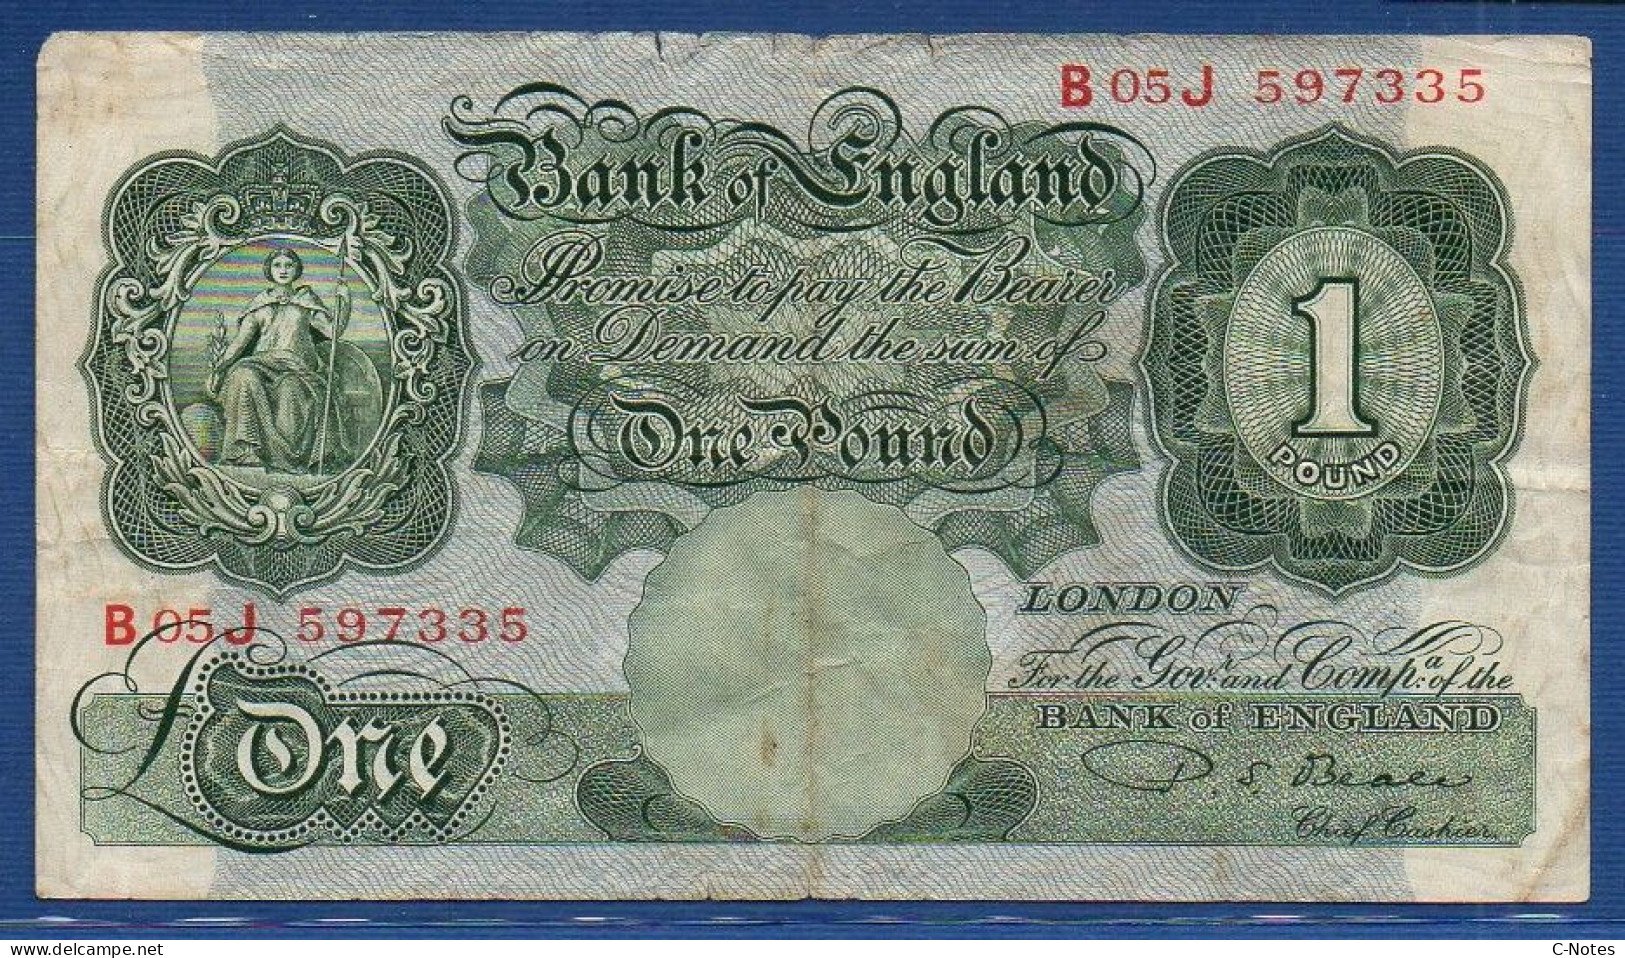 GREAT BRITAIN - P.369b – 1 Pound ND (1948 - 1960) Circulated,  S/n B05J 597335 - 1 Pond